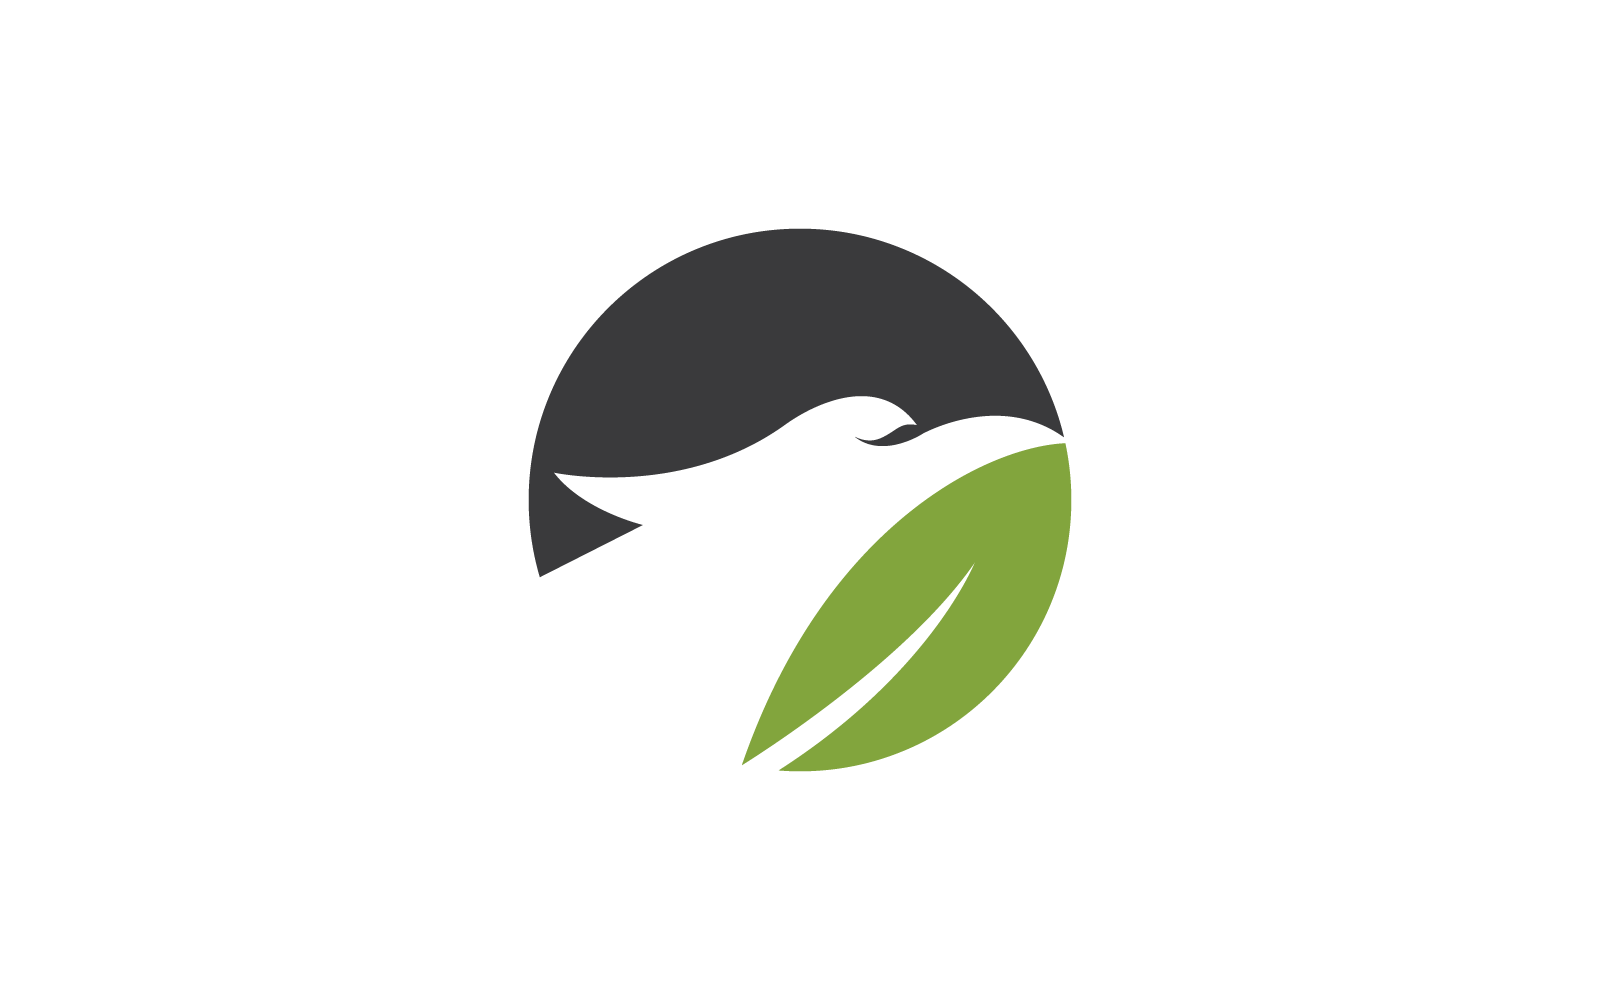 Falcon eagle bird with green leaf illustration logo design Logo Template